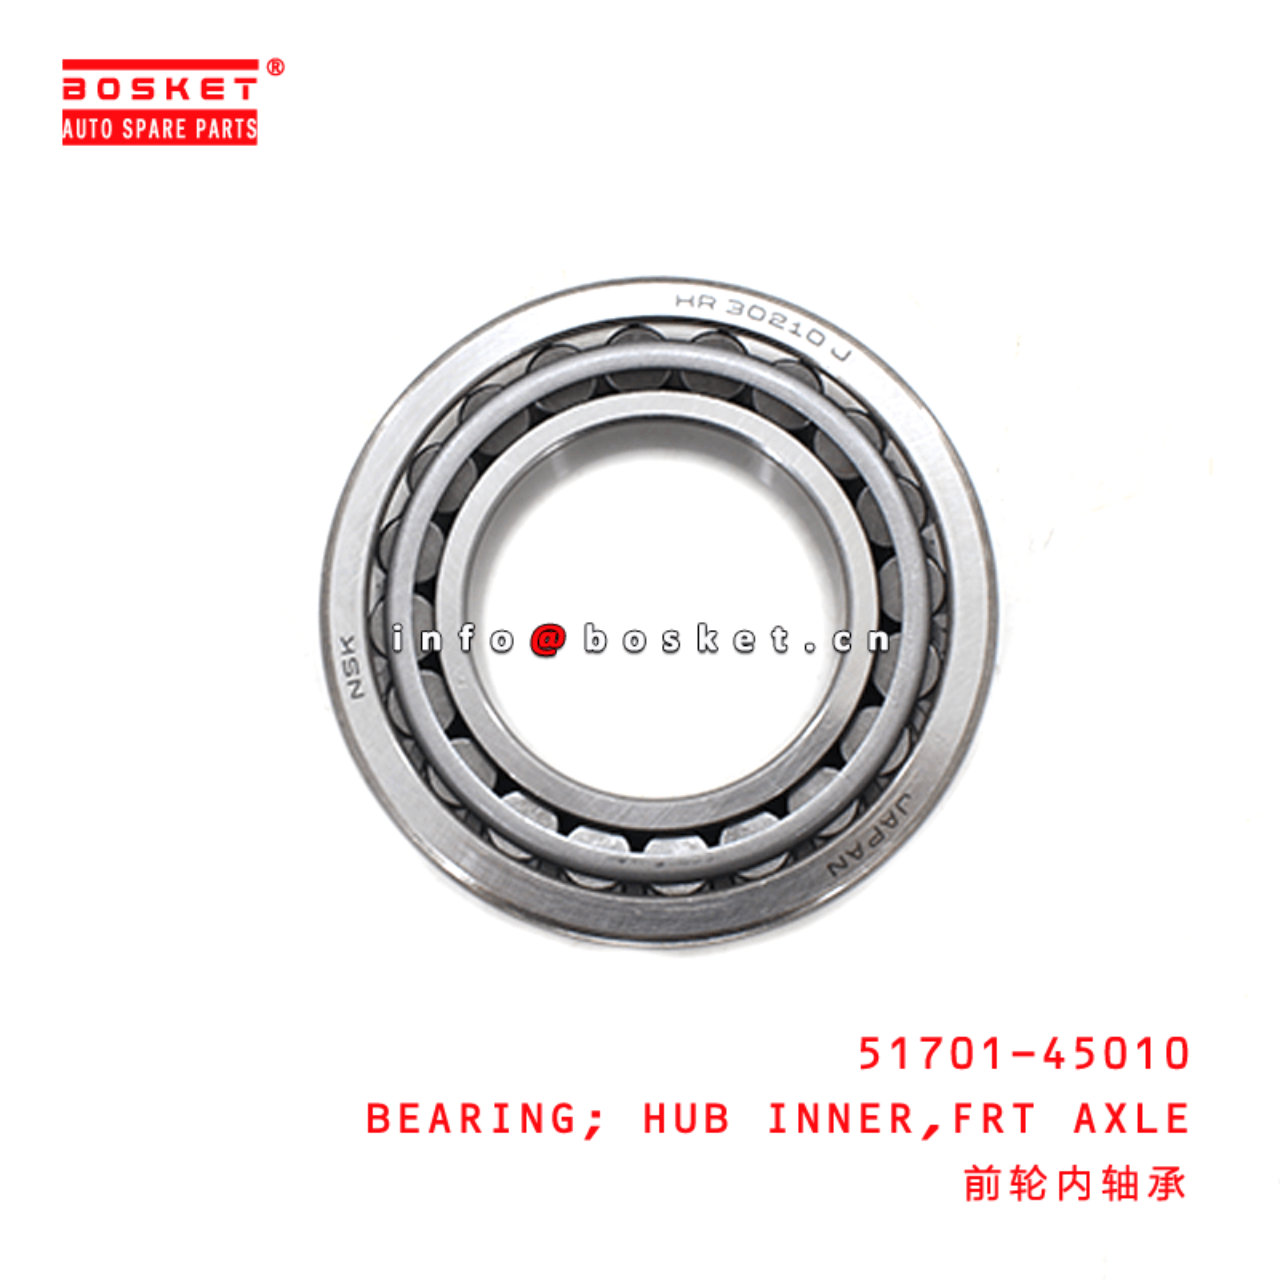  51701-45010 Front Axle Hub Inner Bearing Suitable for ISUZU HD65